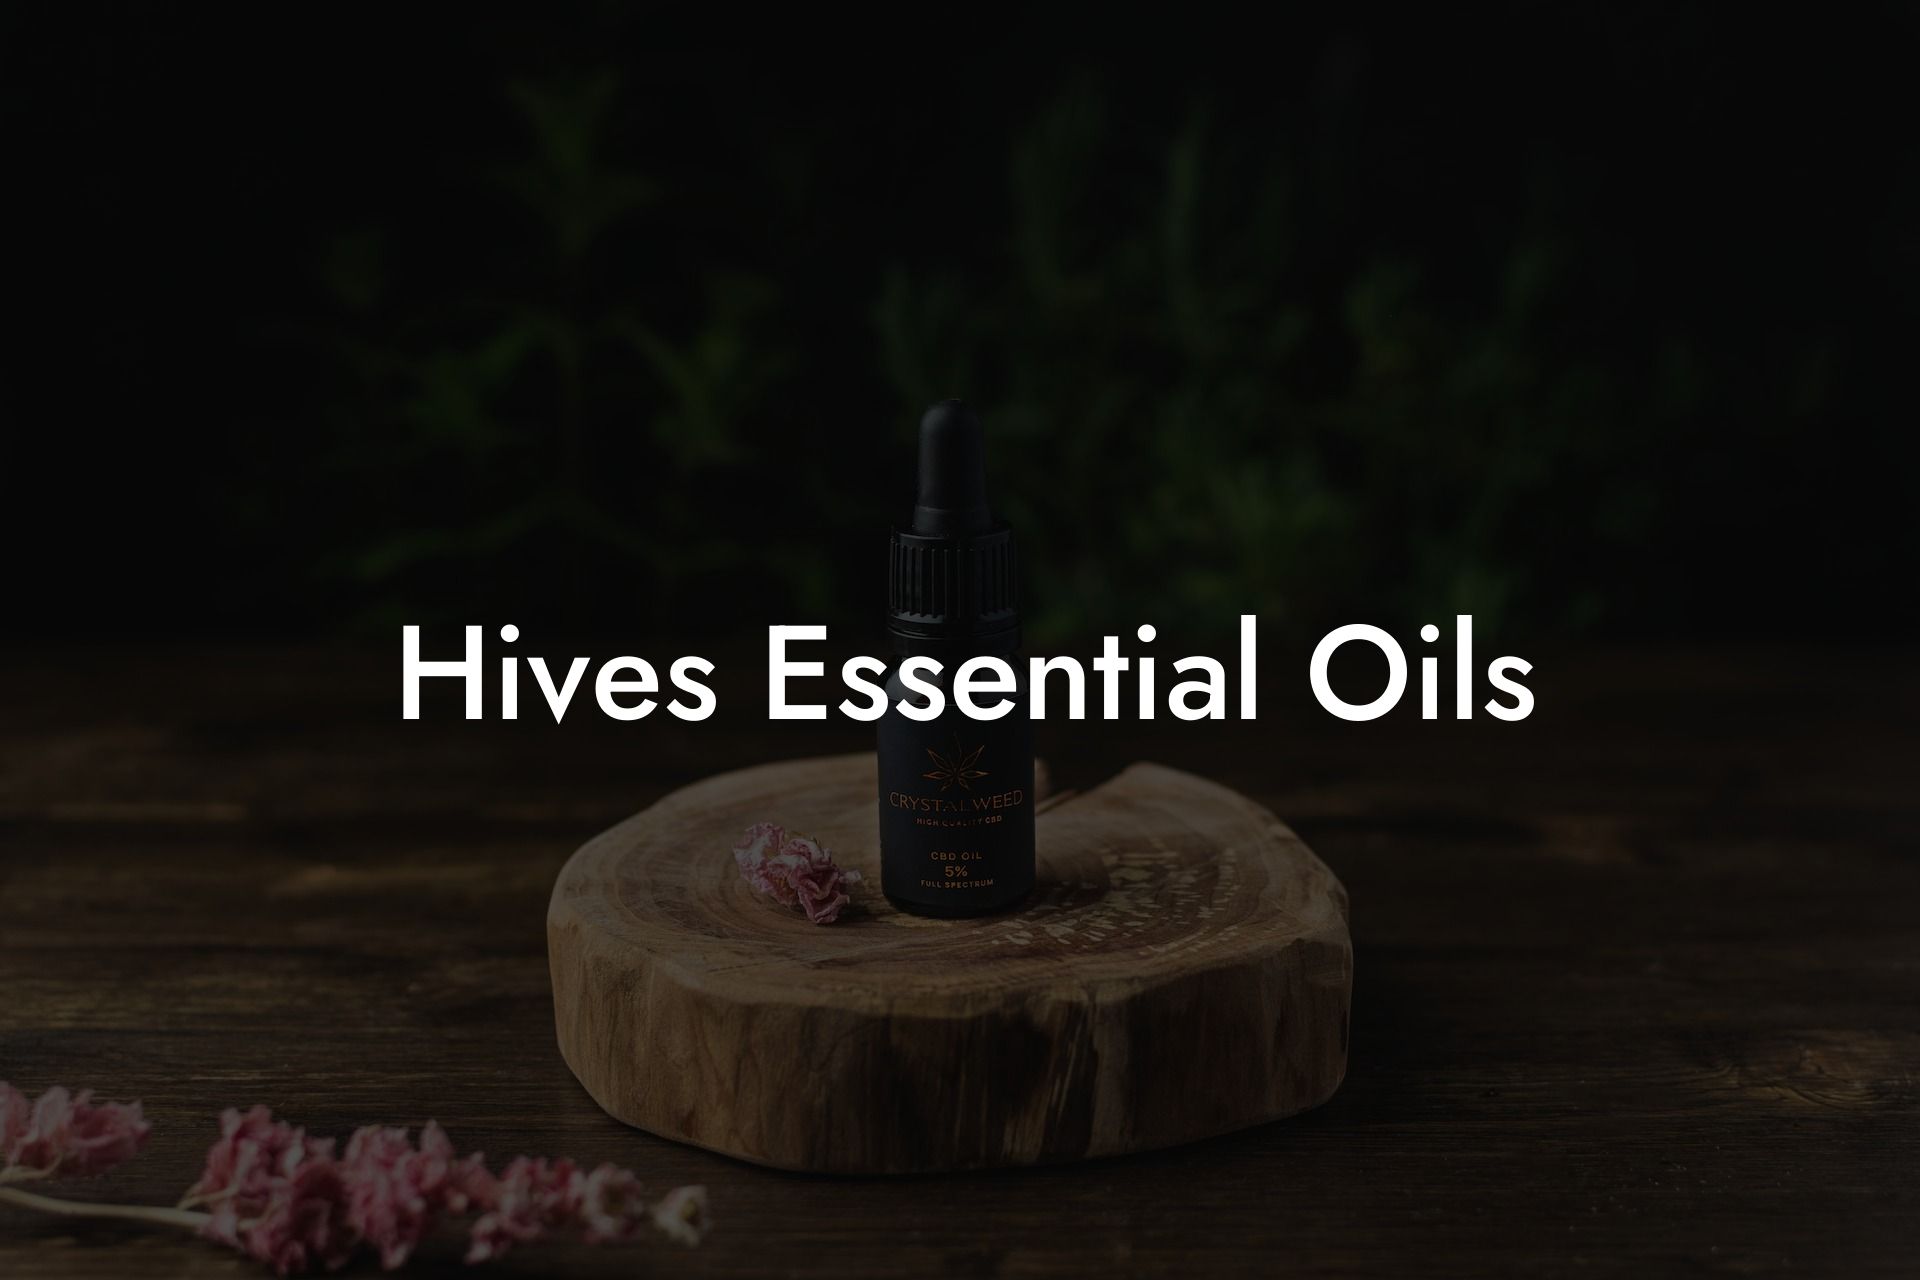 Hives Essential Oils